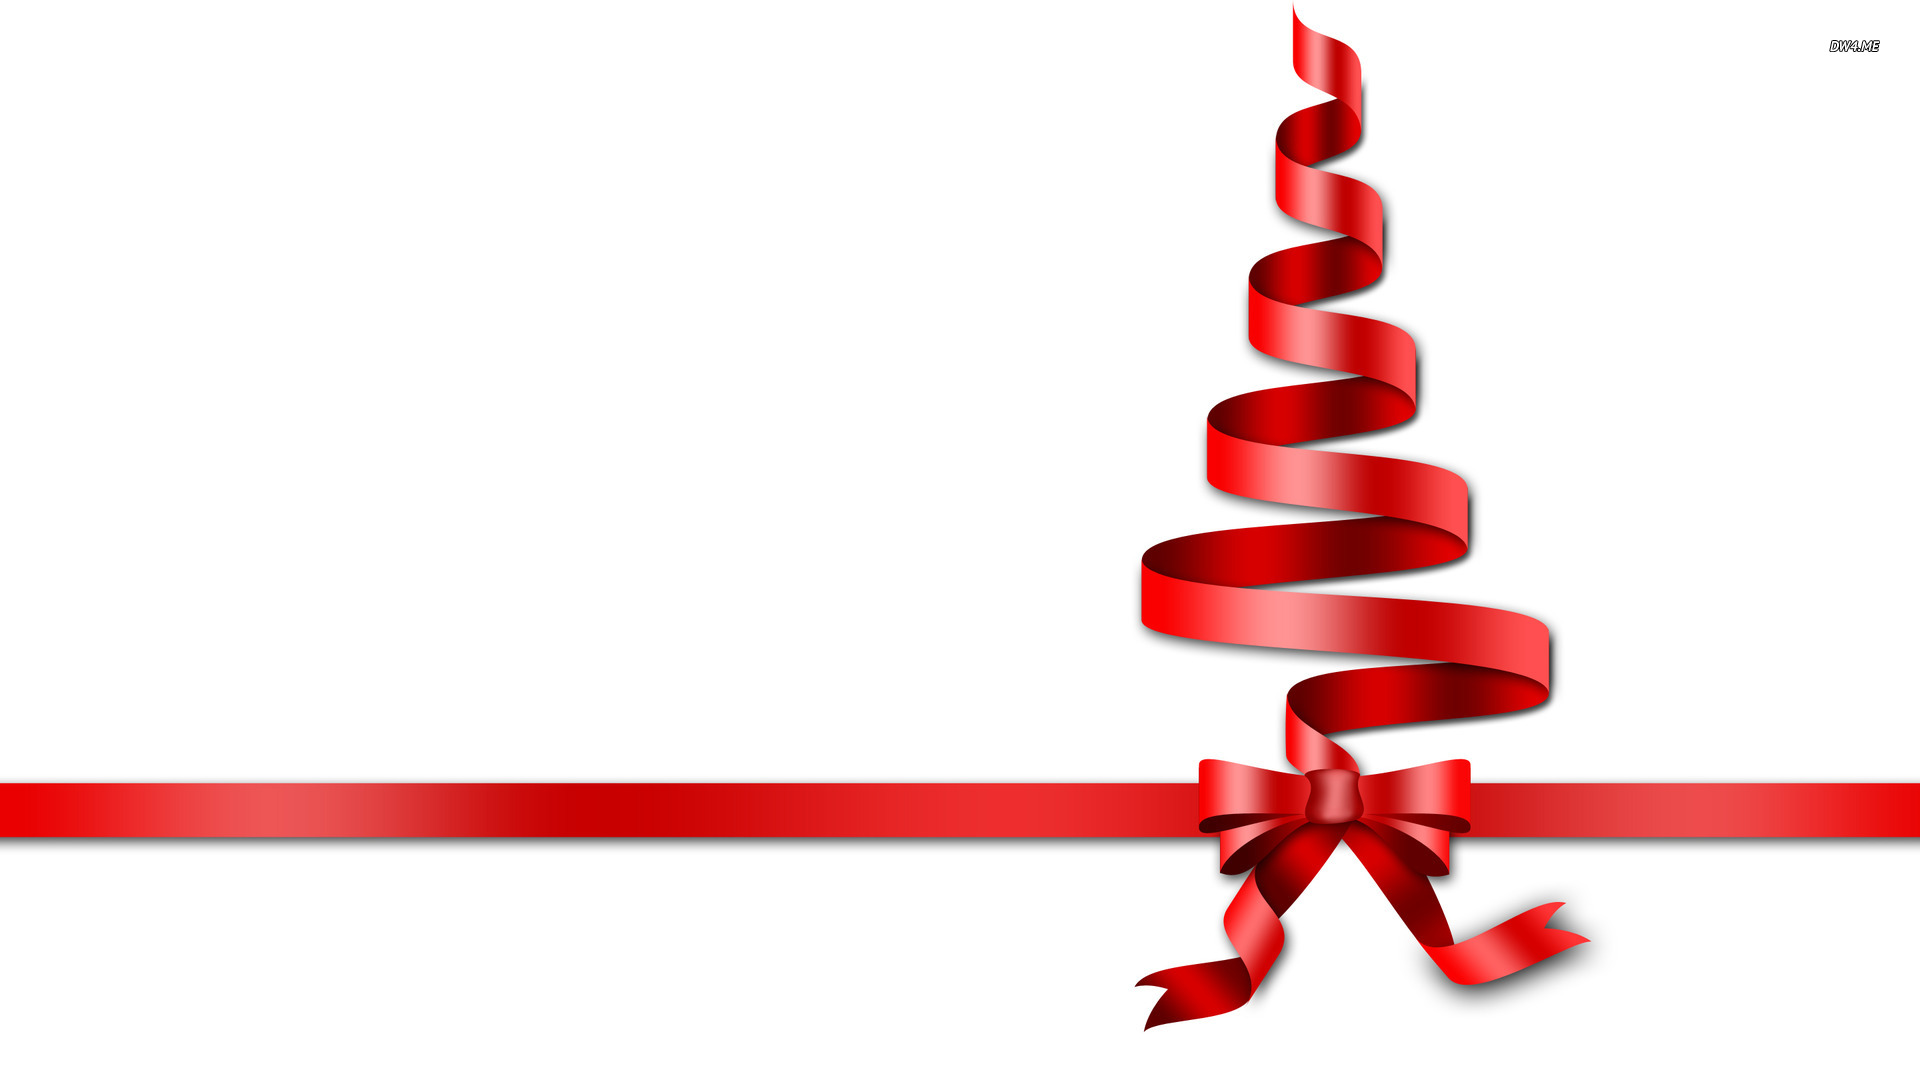 Ribbon Christmas Tree Clip Art